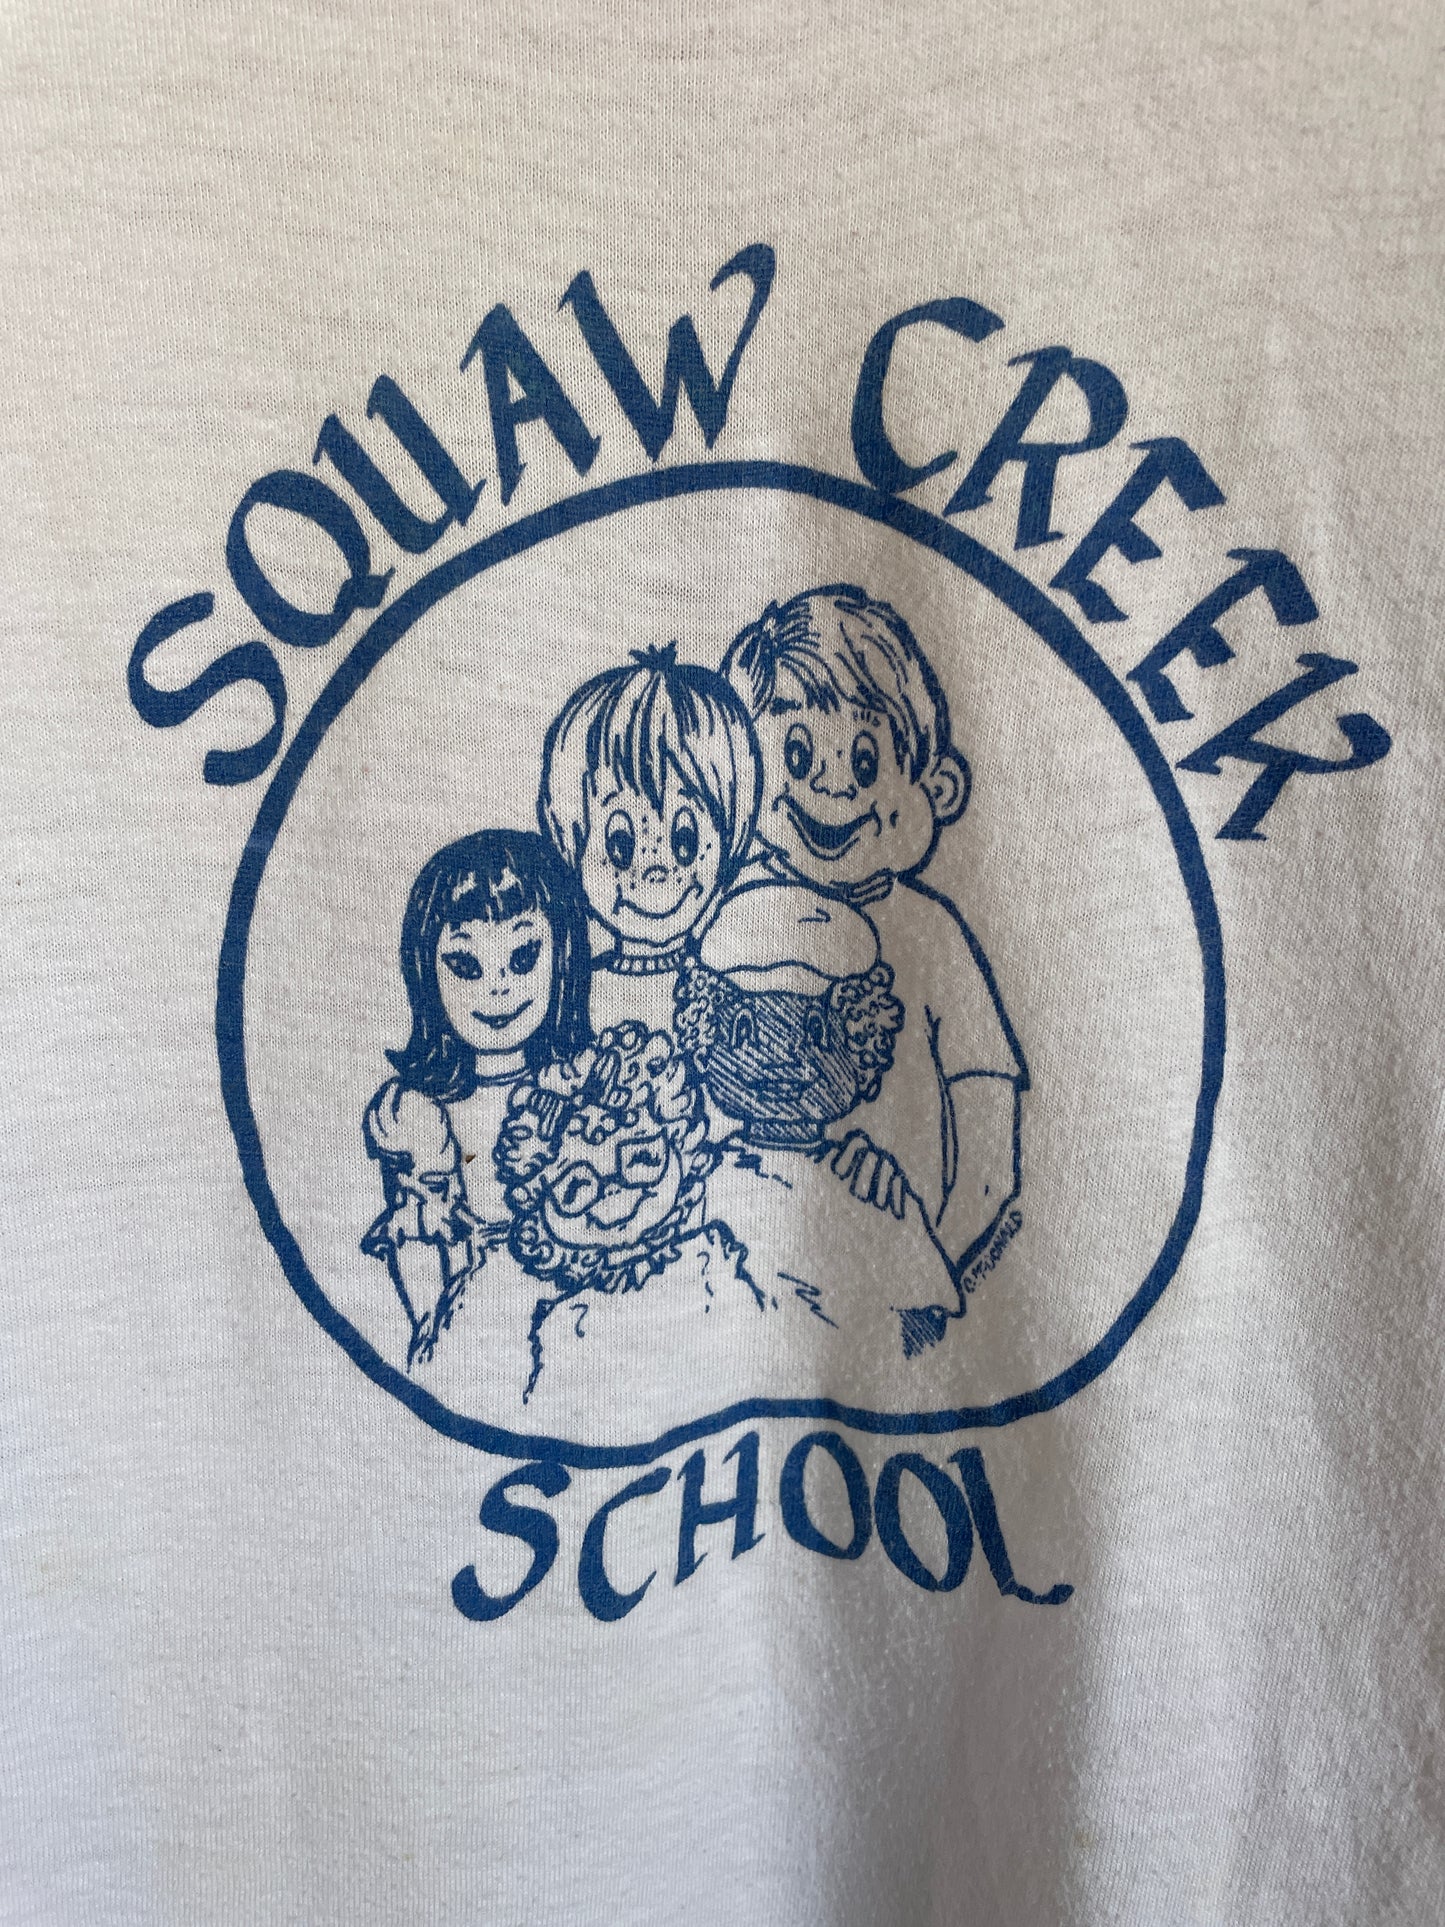 80s Squaw Creek School